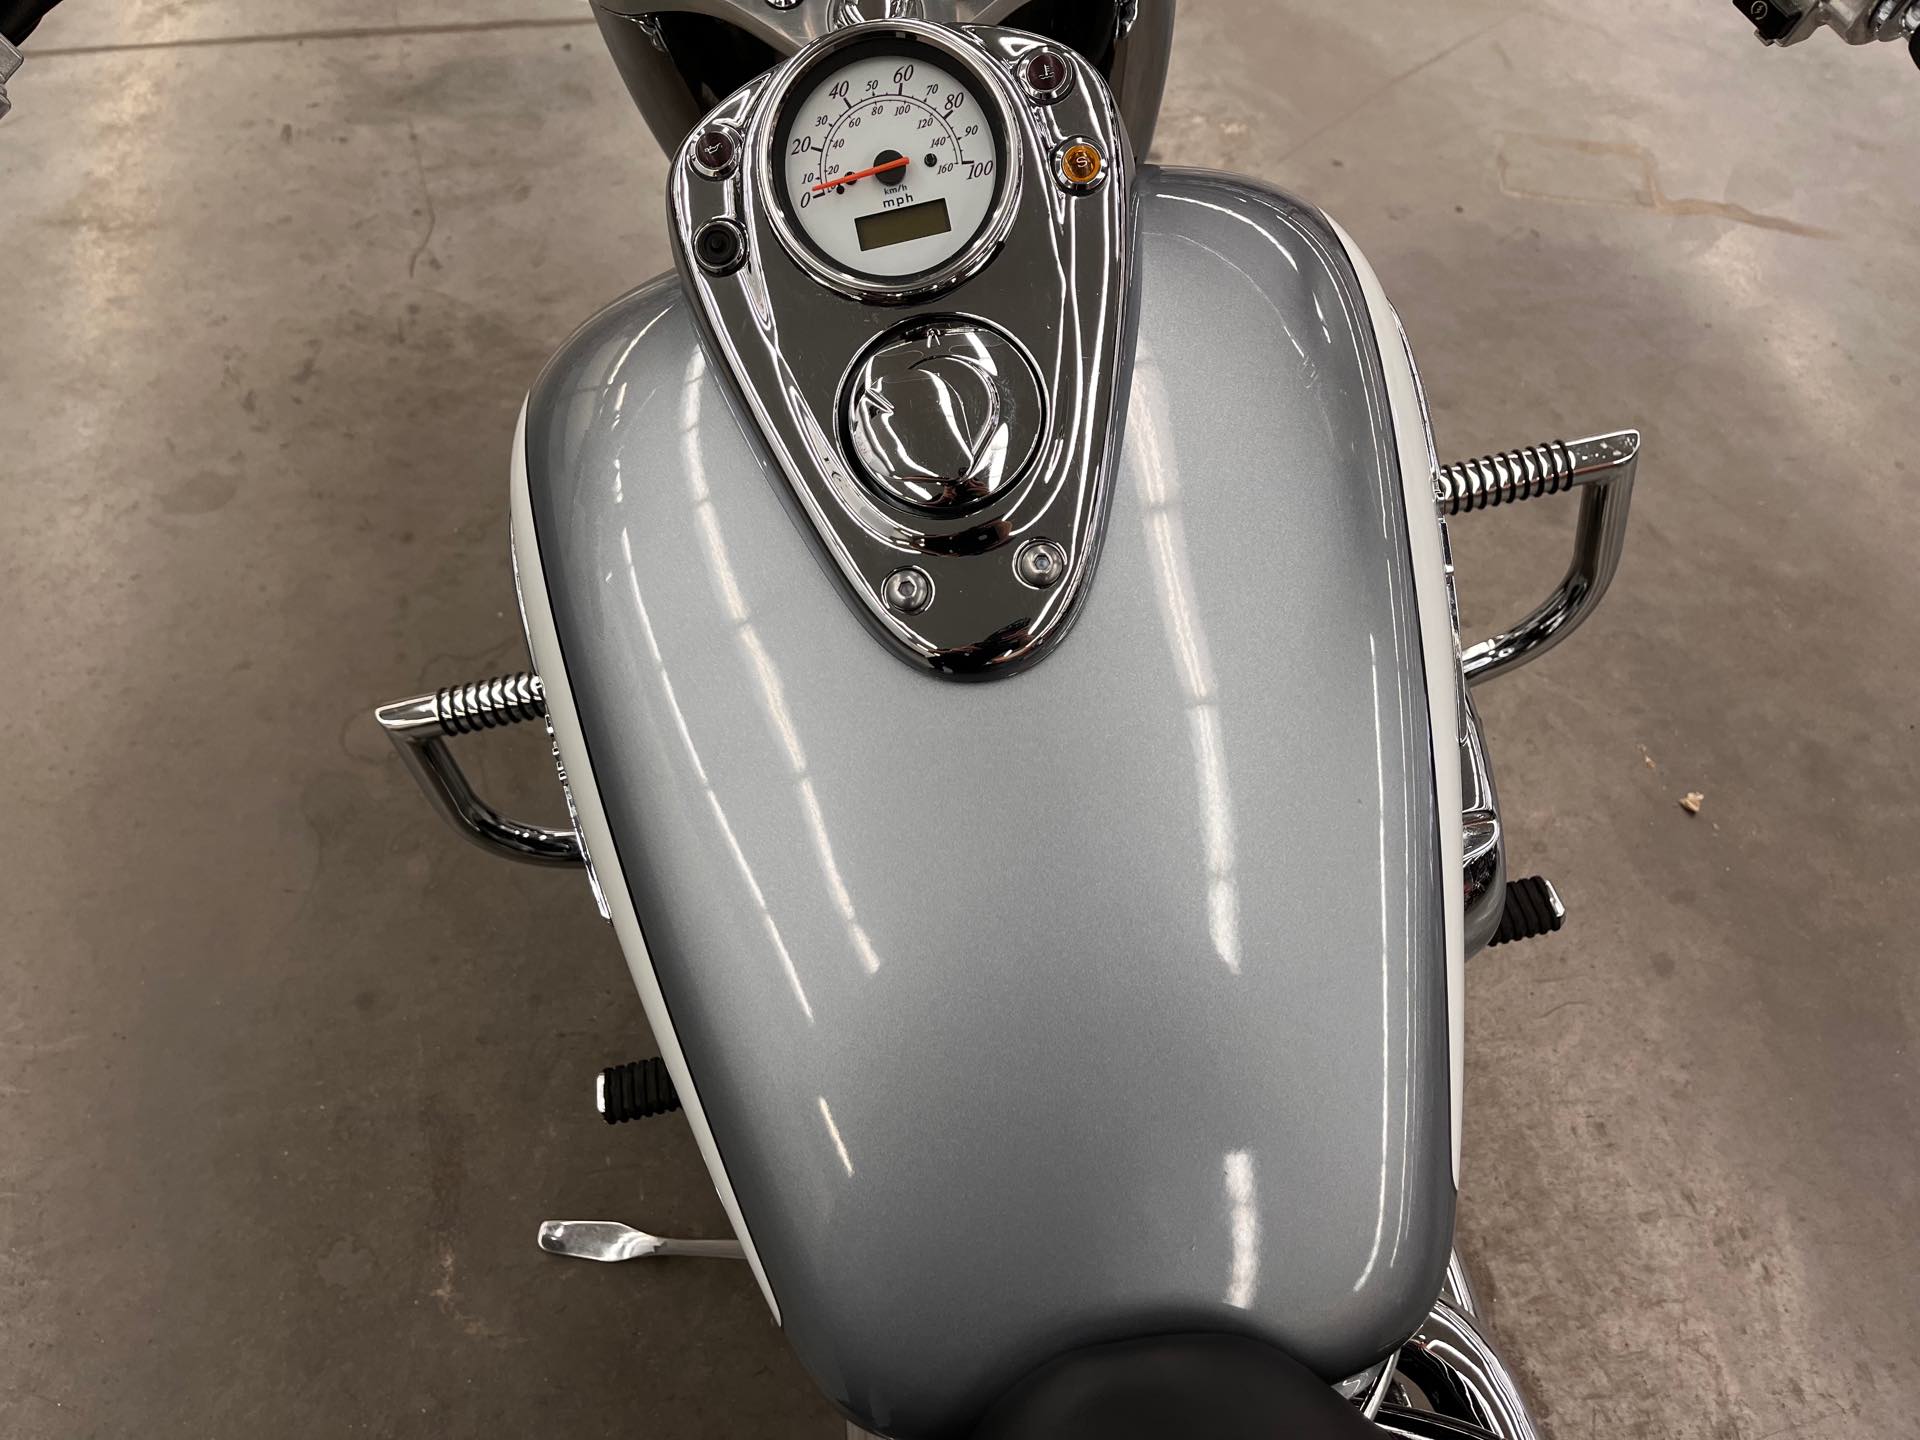 2001 HONDA VT750 at Aces Motorcycles - Denver